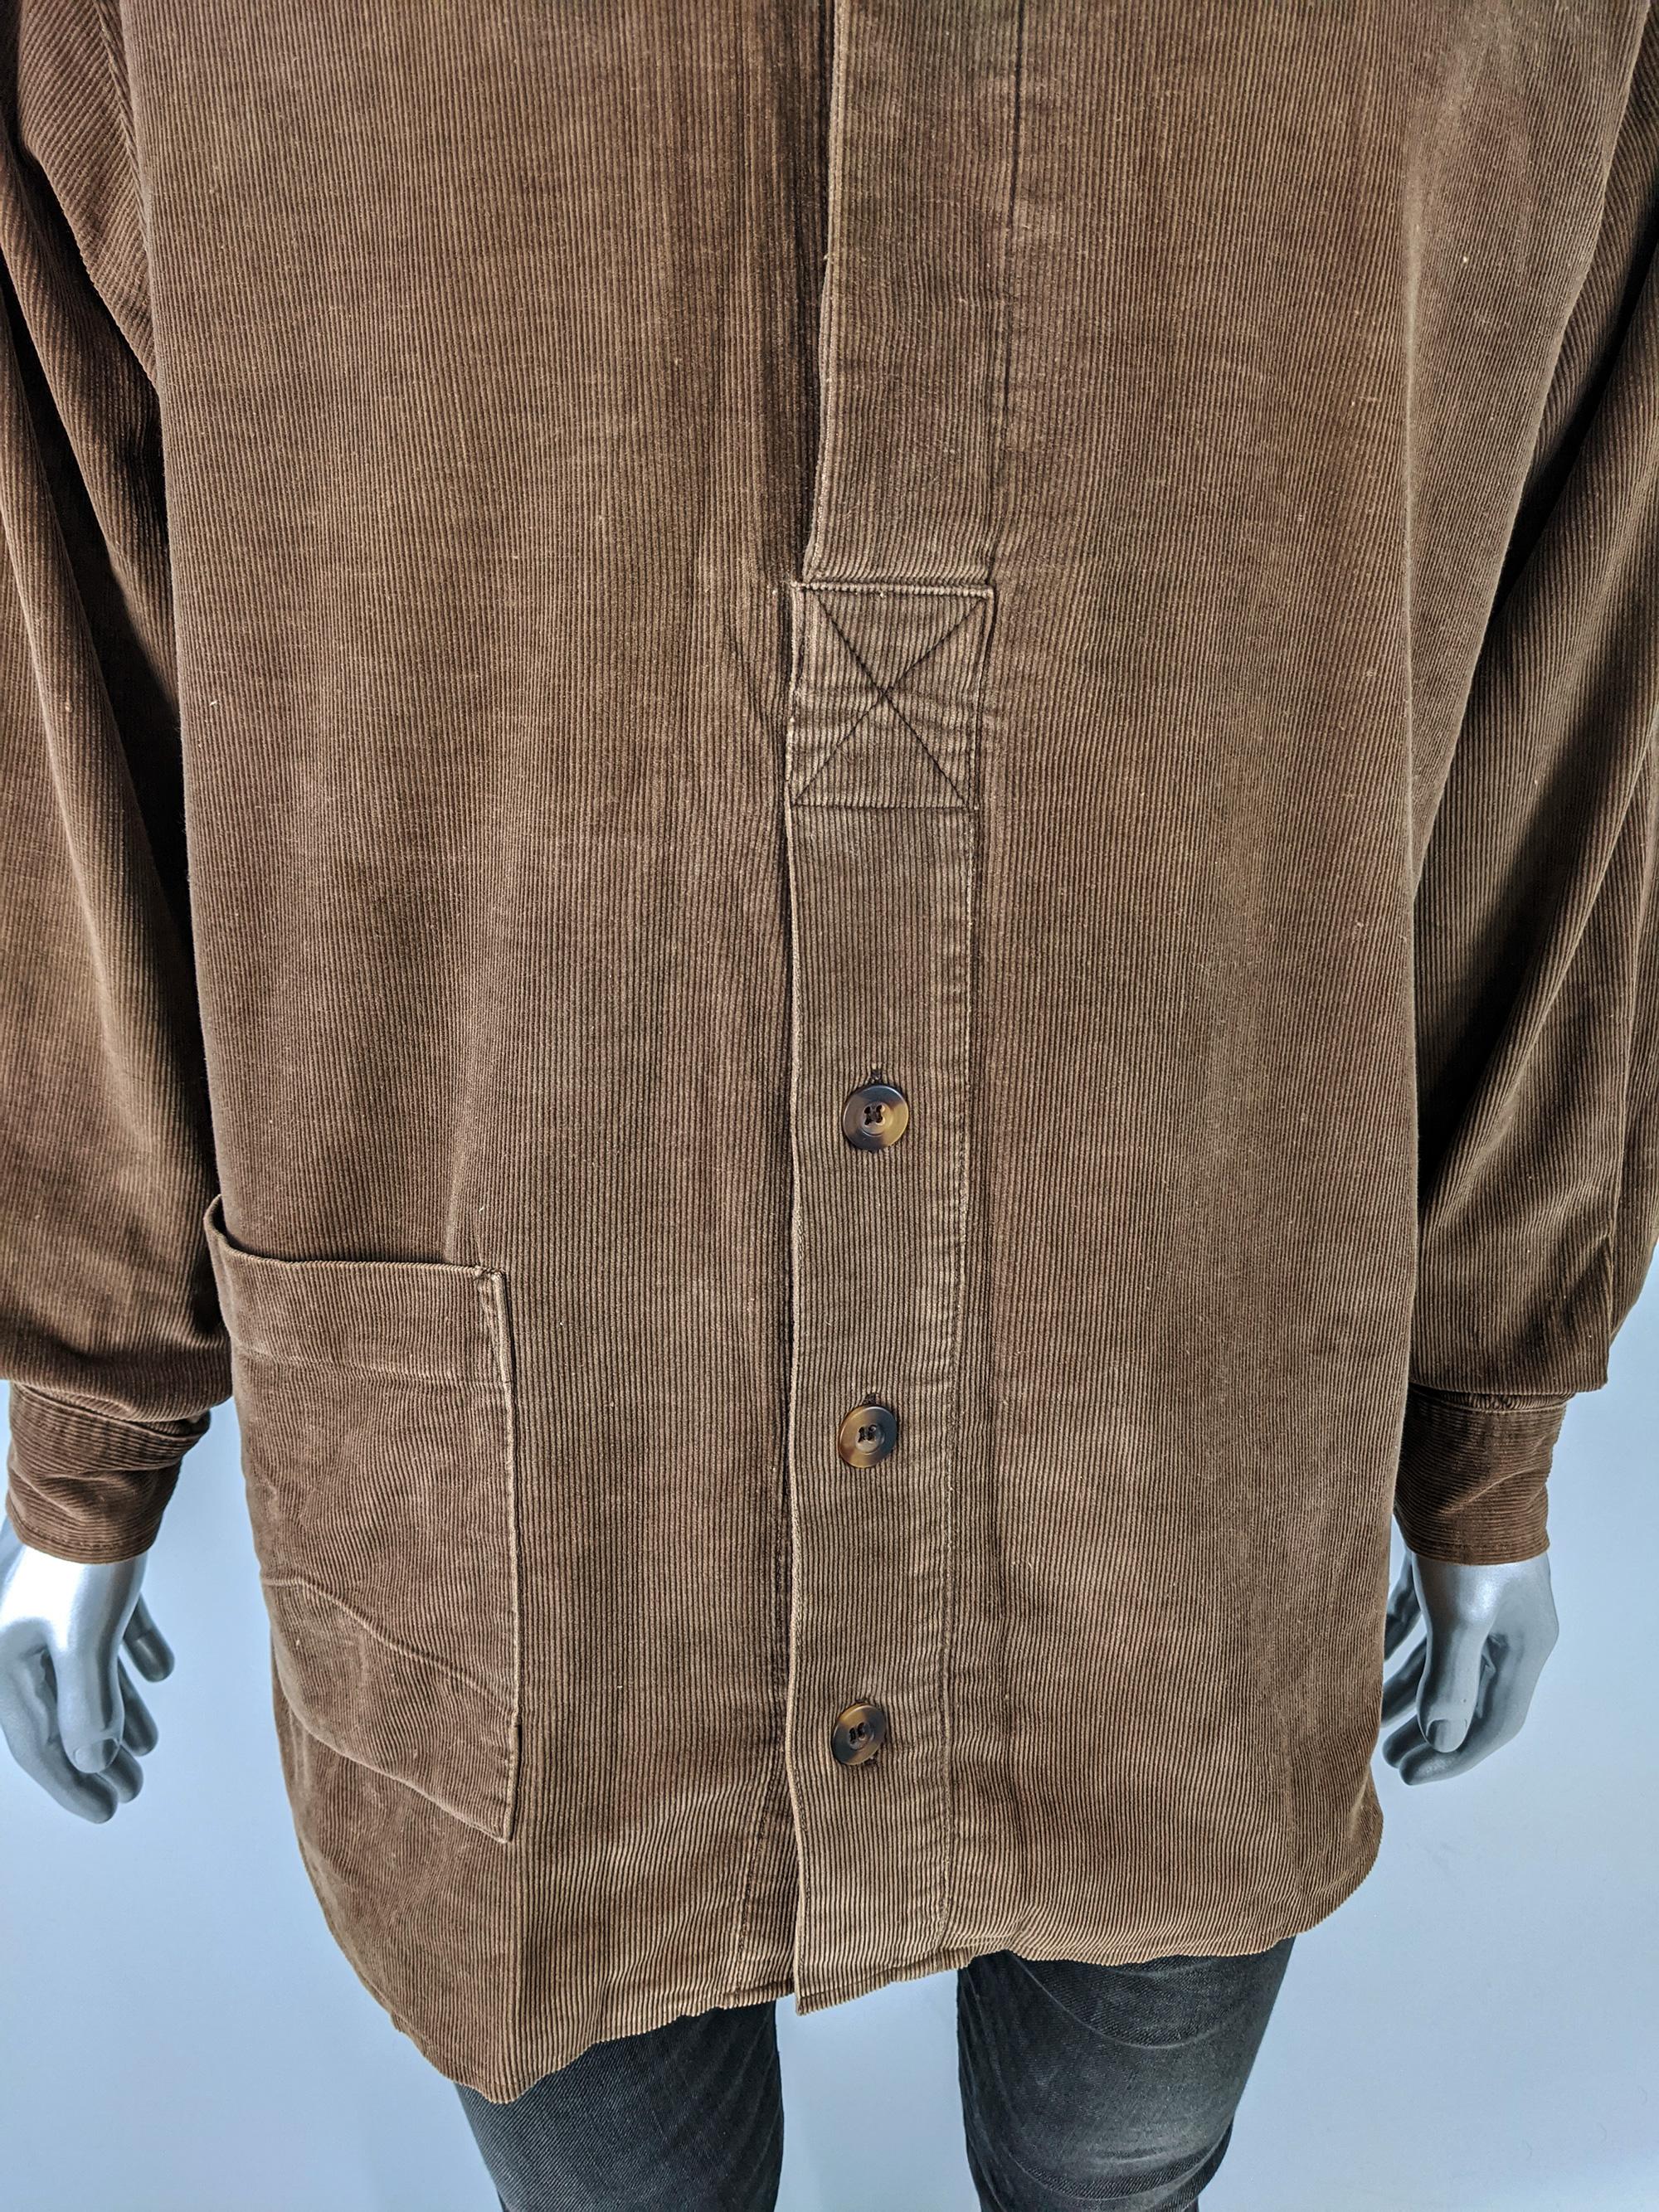 Men's Joe Casely Hayford Vintage Brown Cord Shirt, 1990s